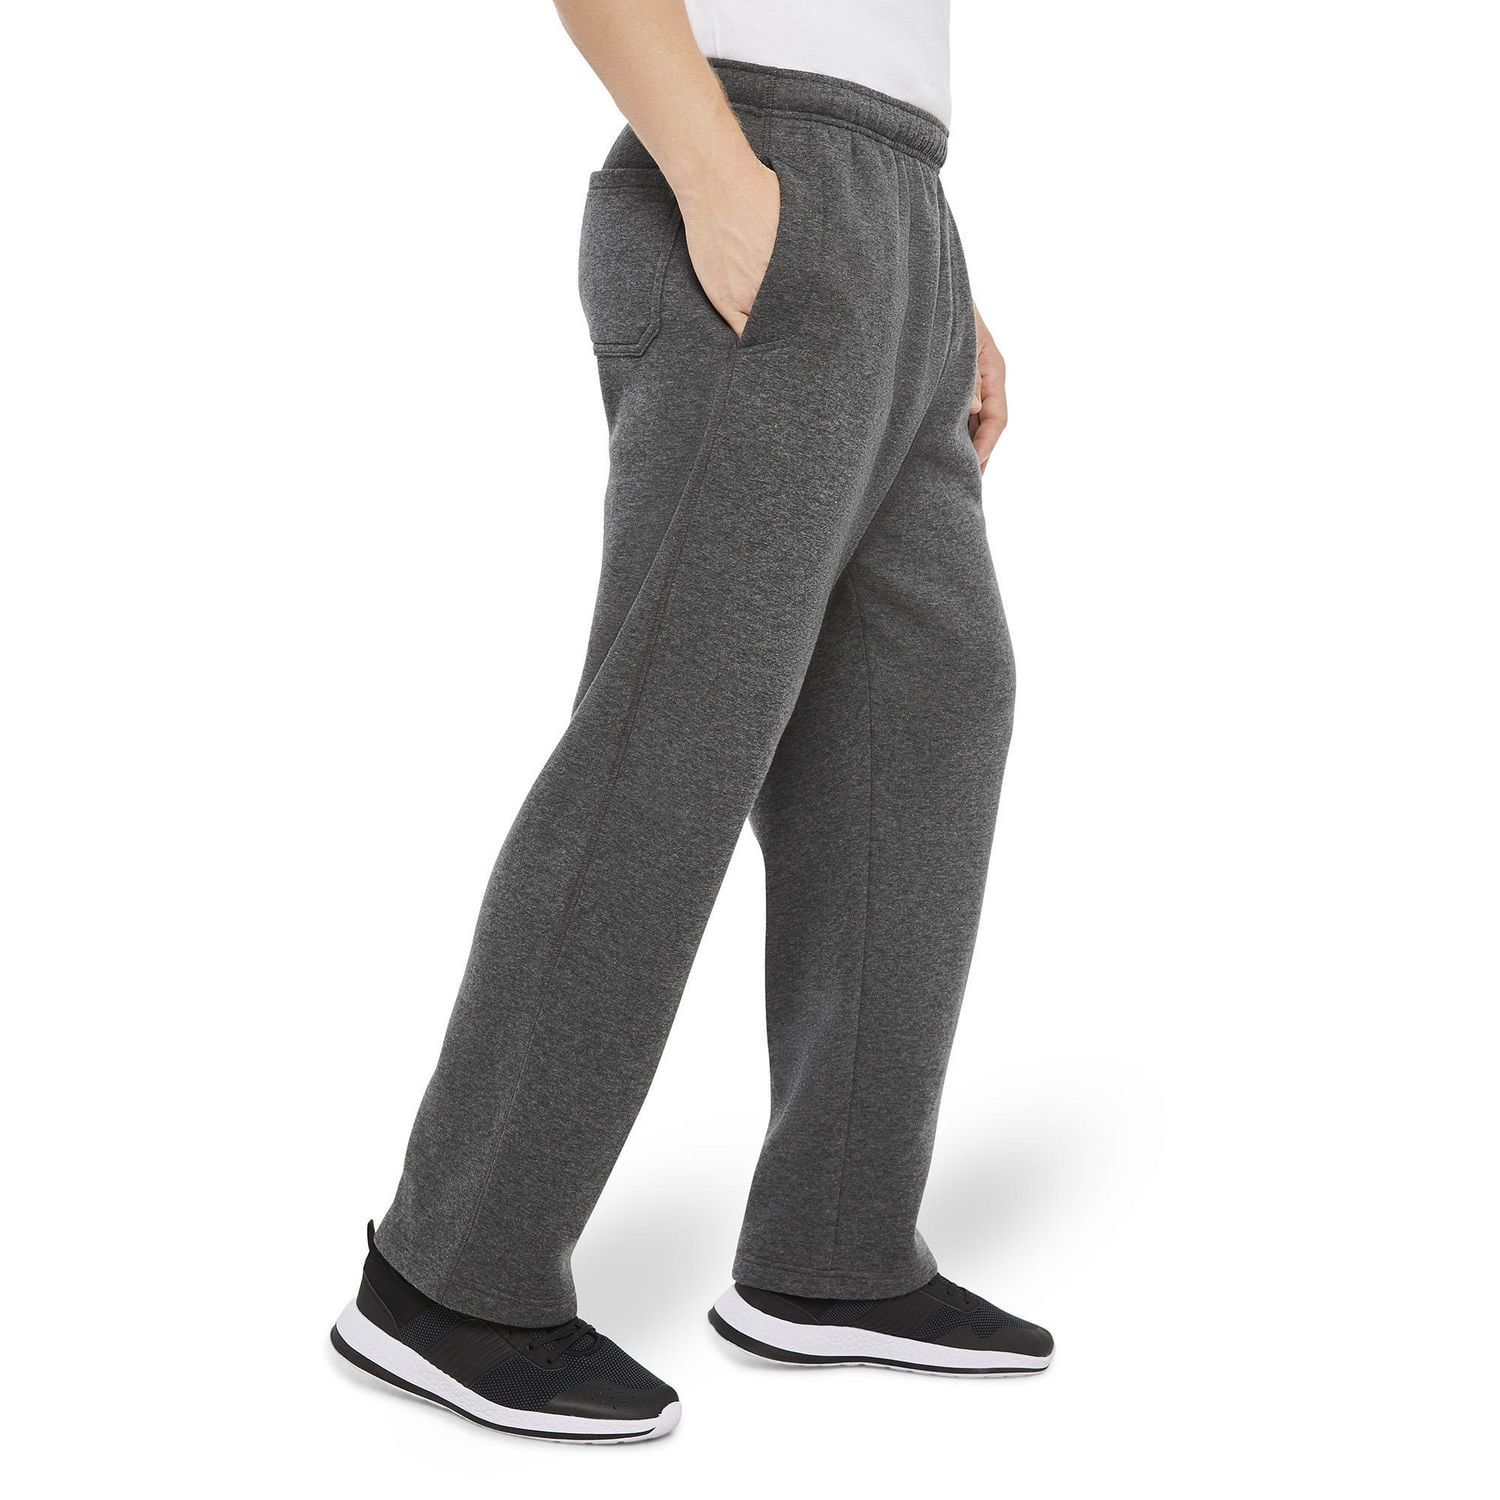 General Pants Co. Basics Sweat Pants - Grey